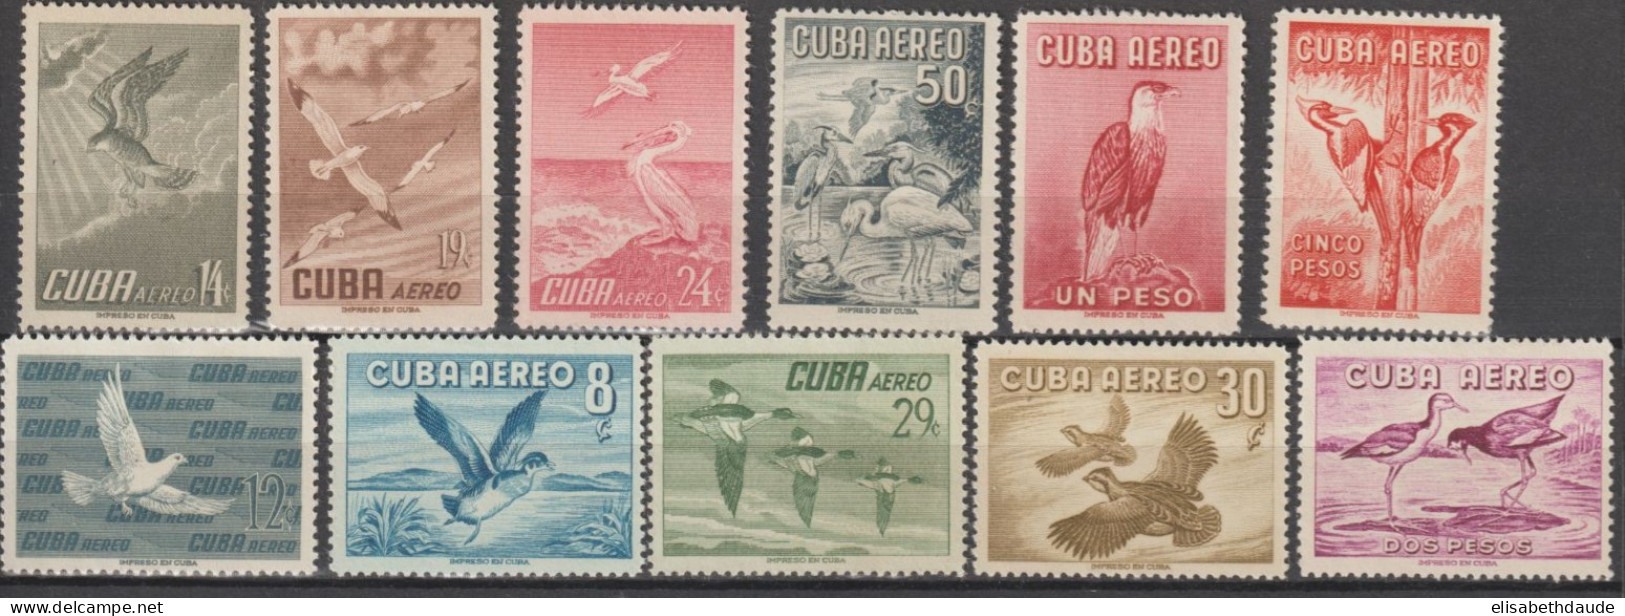 C UBA - 1957 - POSTE AERIENNE - SERIE COMPLETE OISEAUX / BIRDS YVERT N°135/145 ** / * MNH / MLH - COTE YVERT = 90 EUR - Posta Aerea